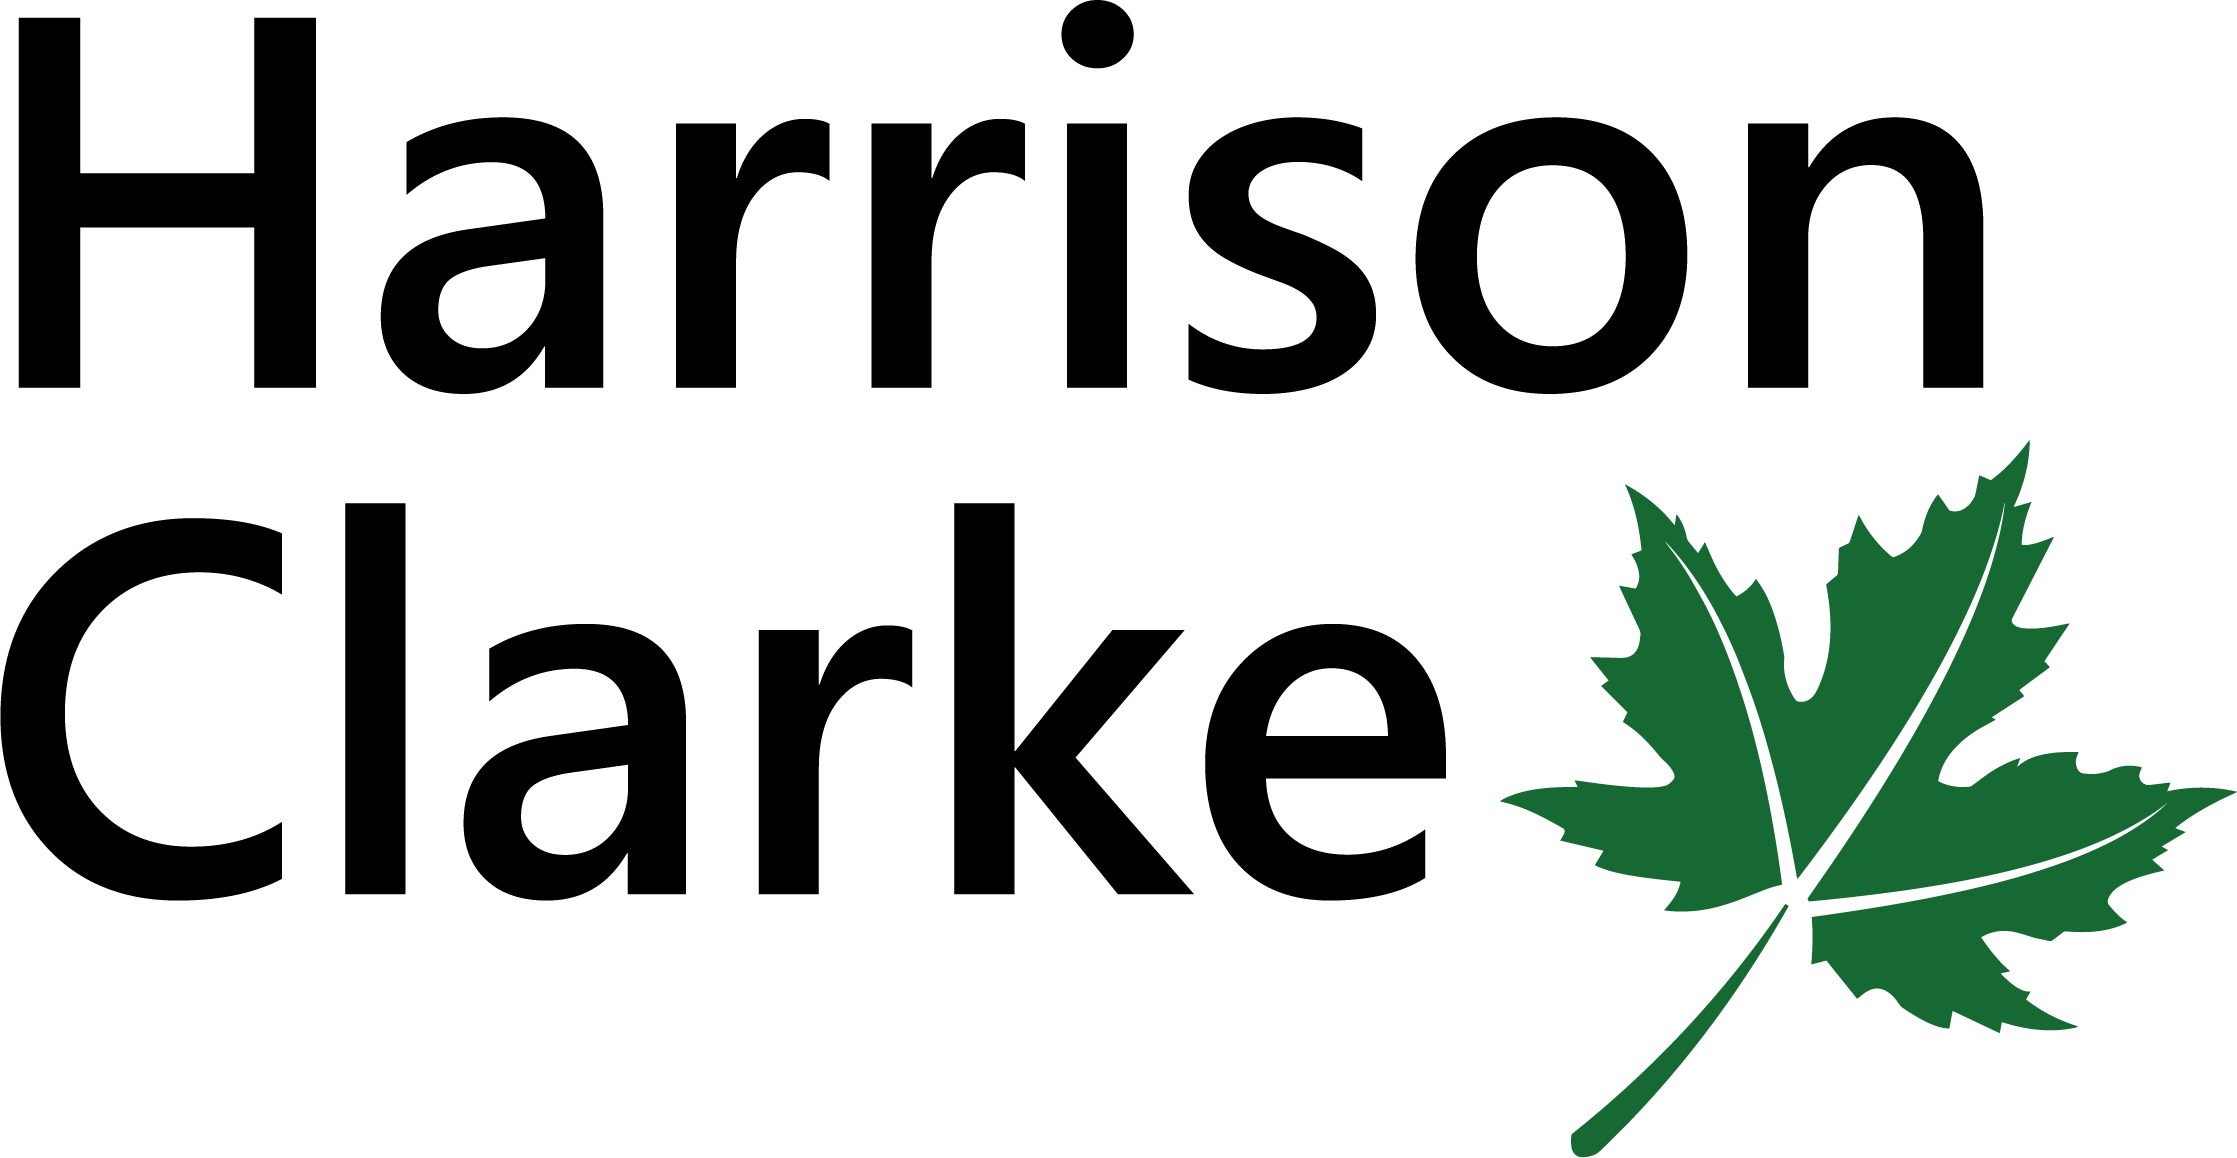 Black and Green Harrison Clarke logo